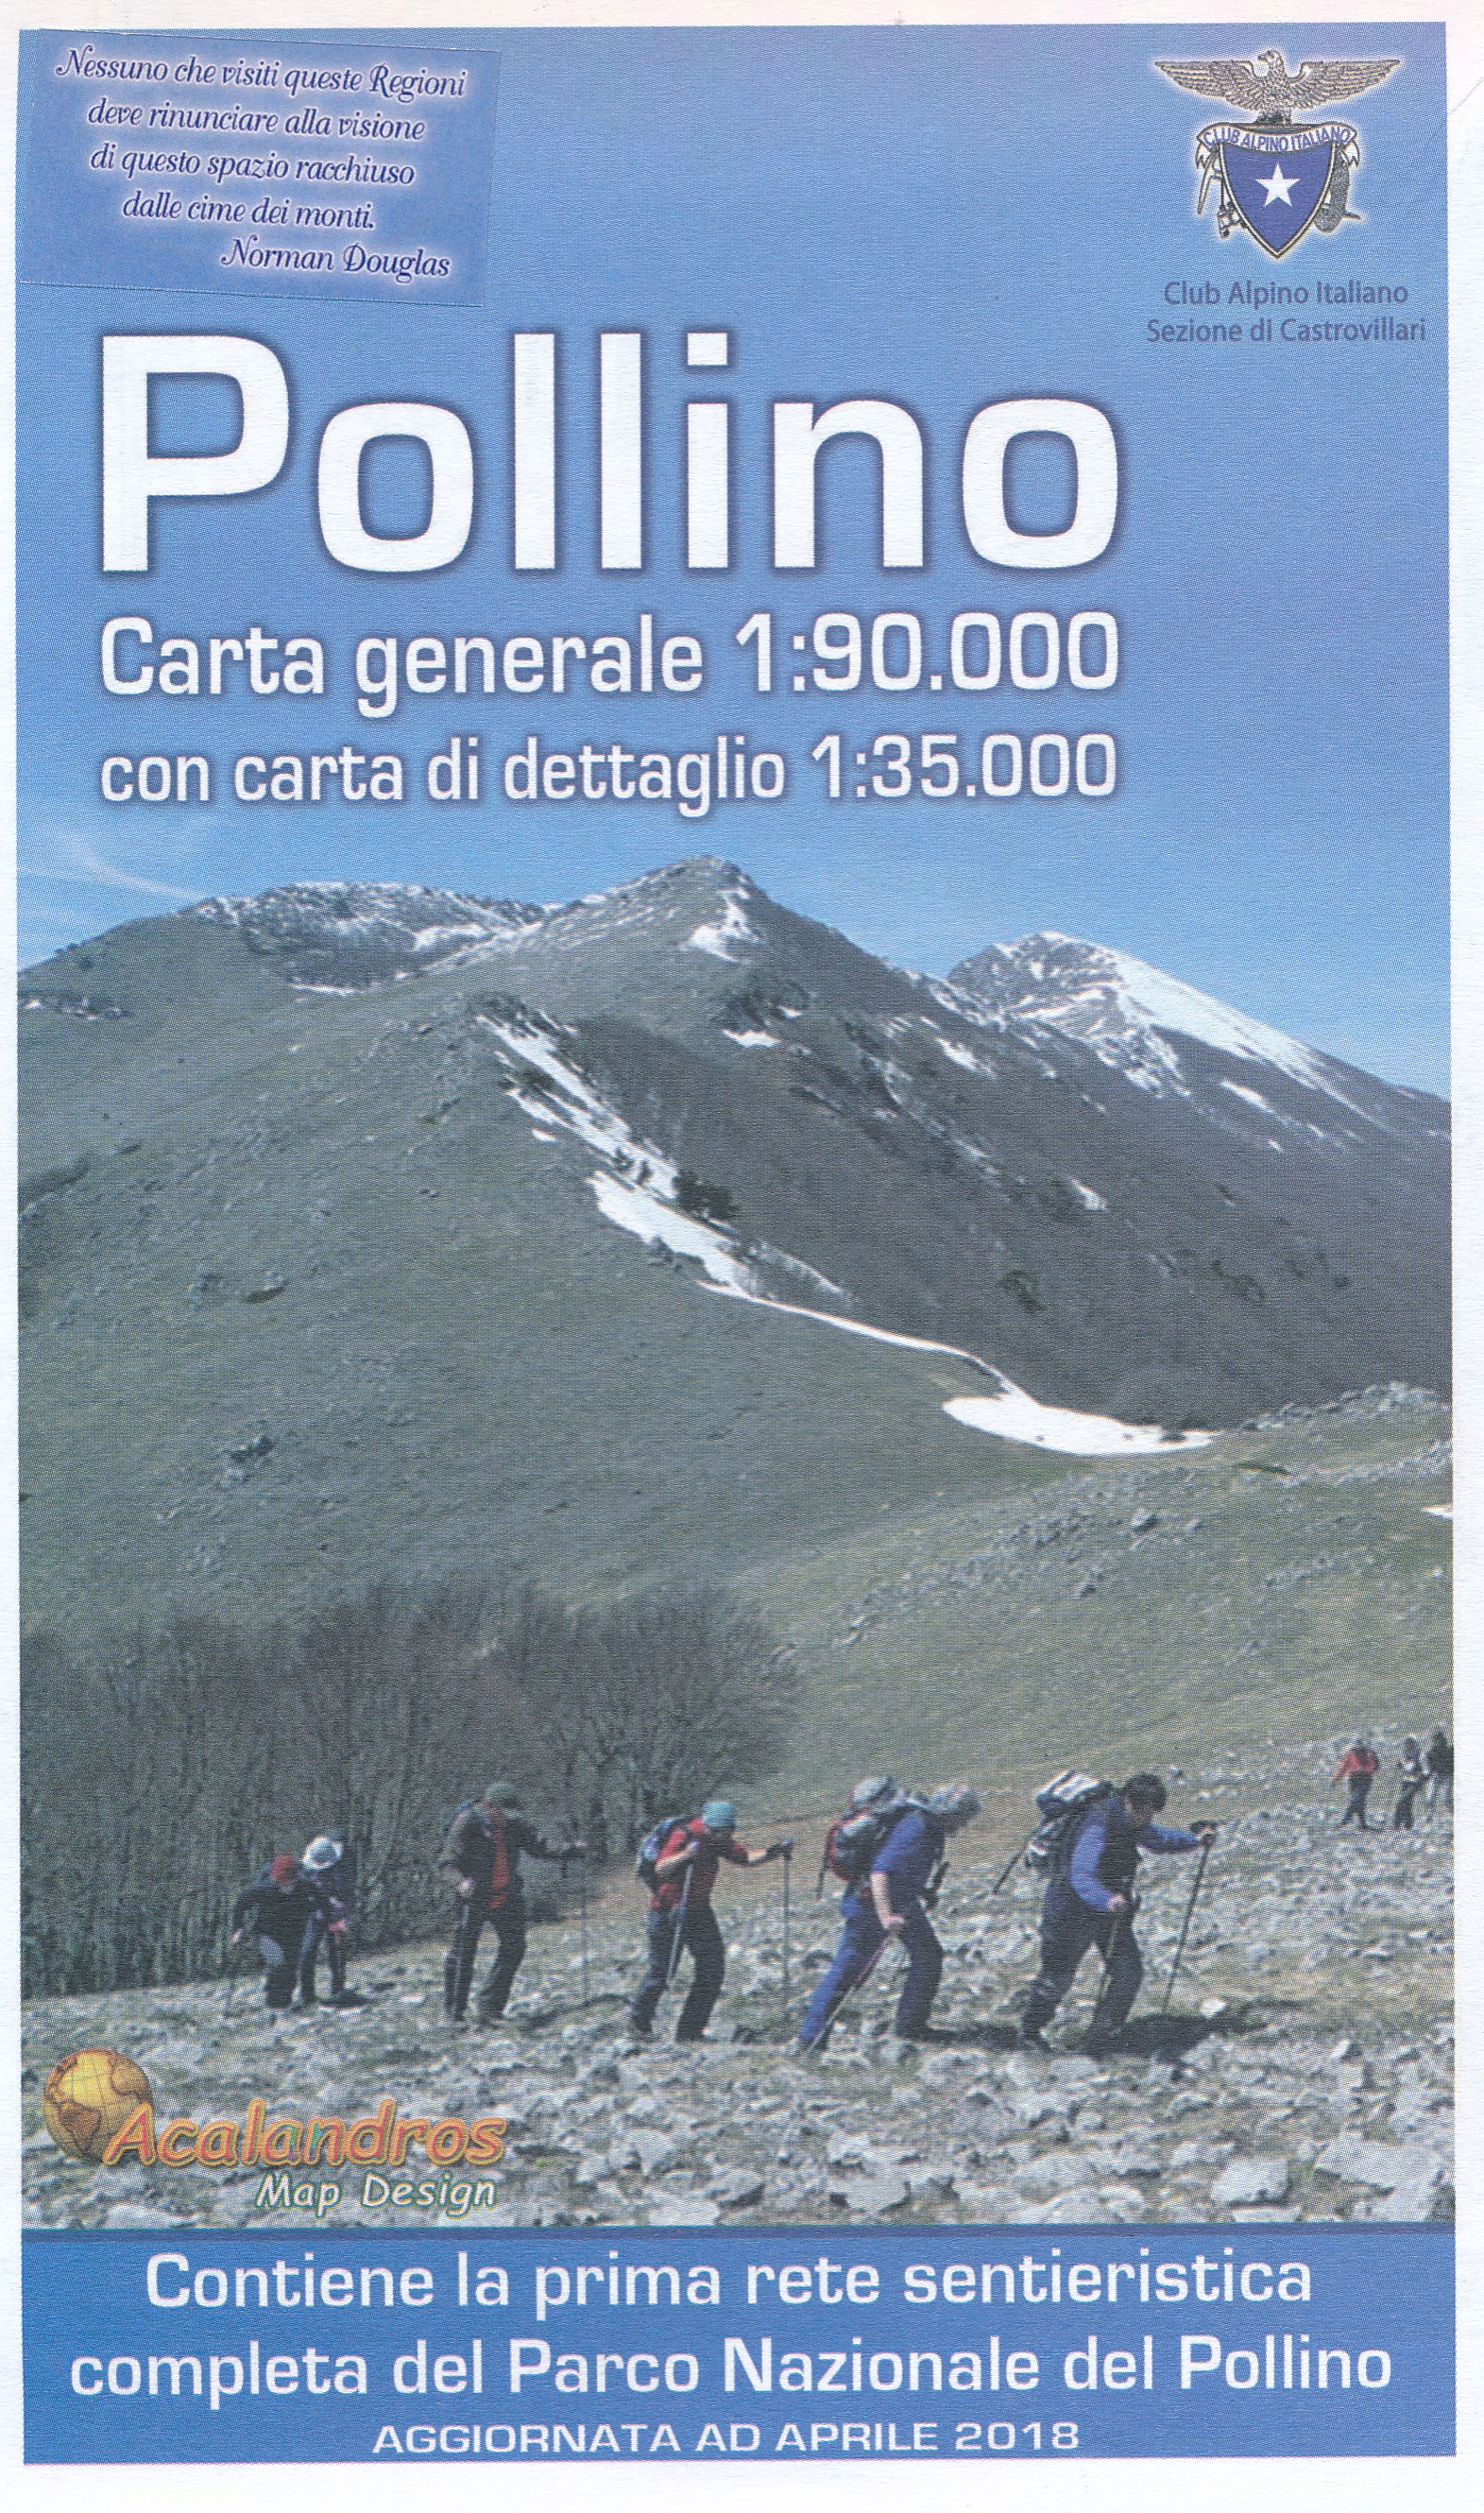 Online bestellen: Wandelkaart Pollino | Club Alpino Italiano